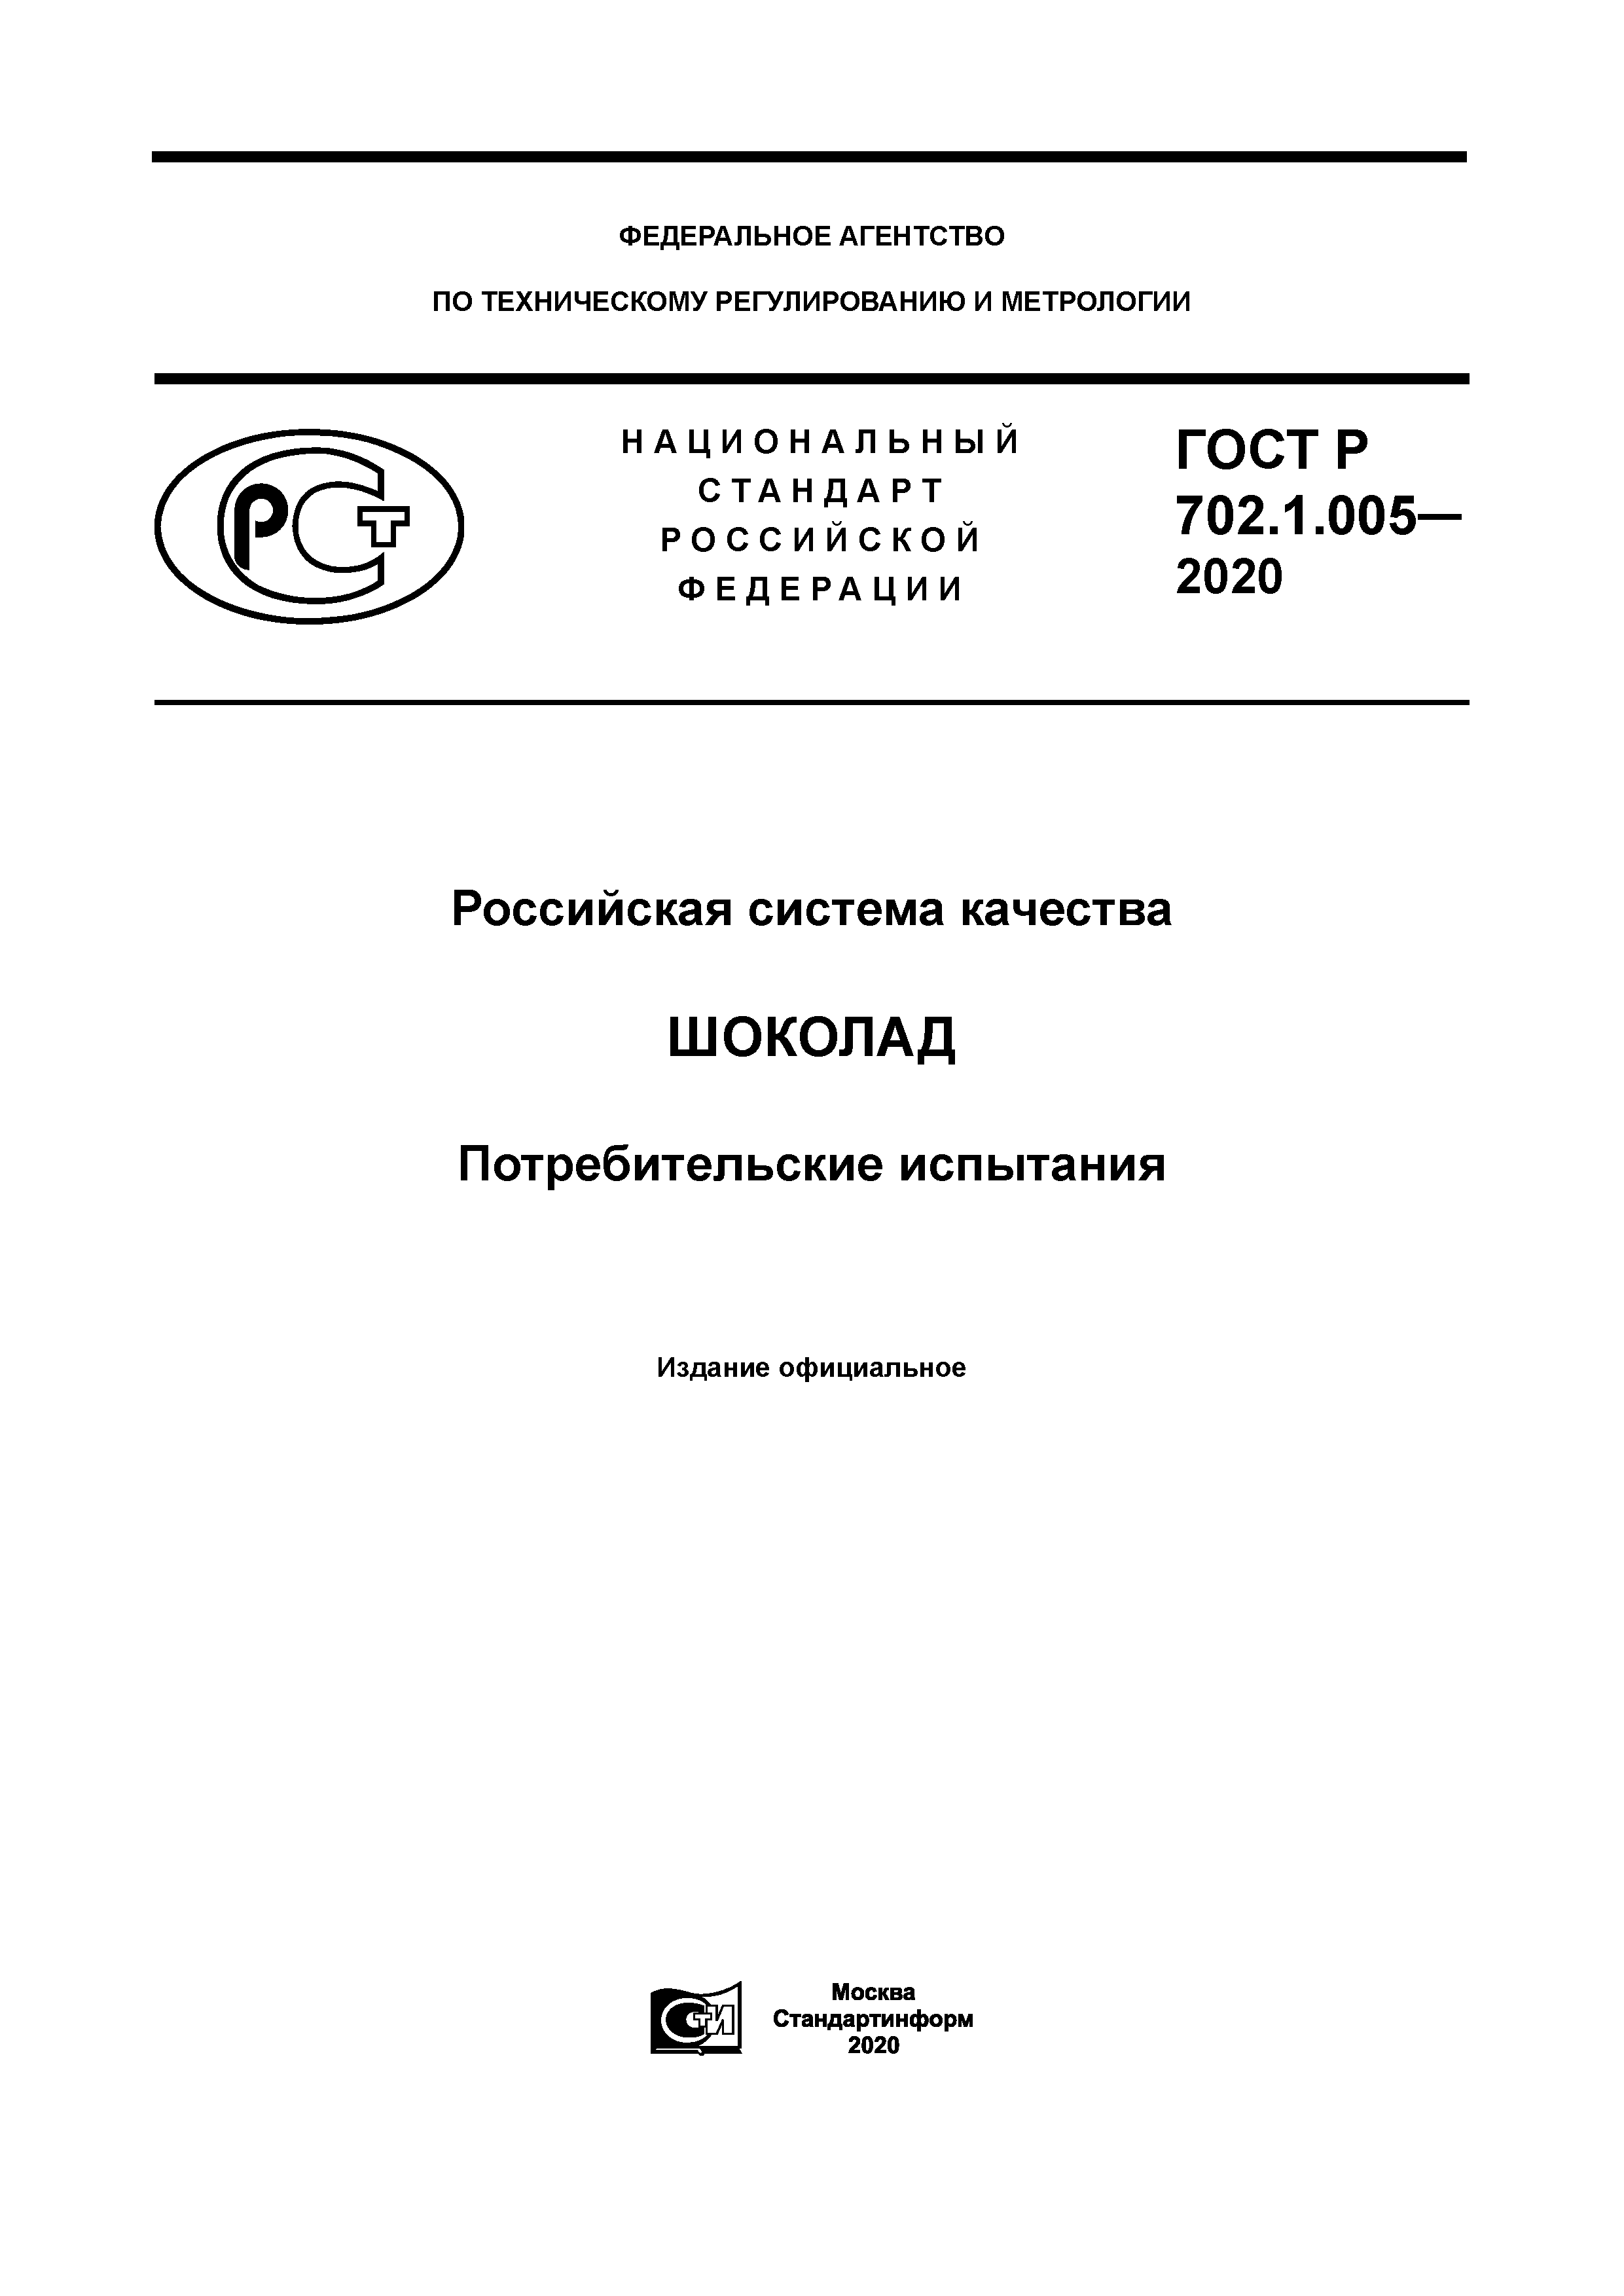 ГОСТ Р 702.1.005-2020